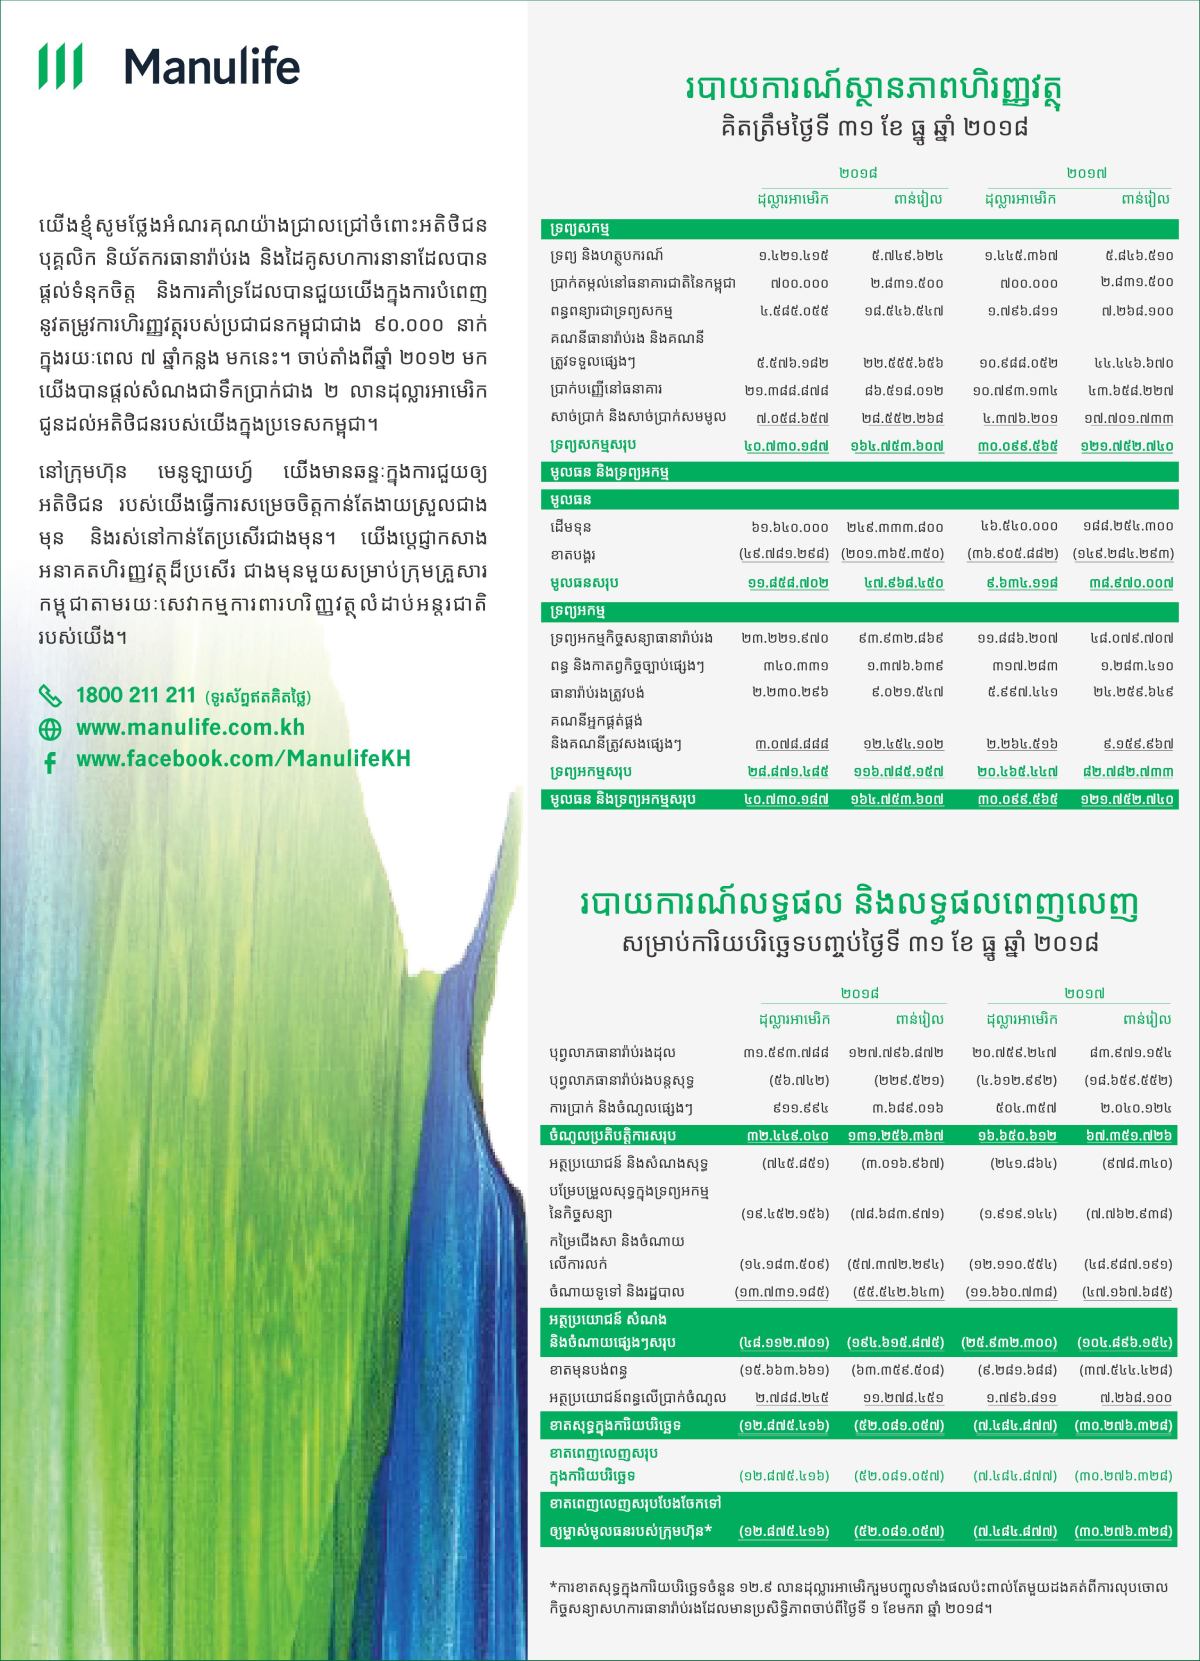 financial report 2018-manulife cambodia-life insurance-km